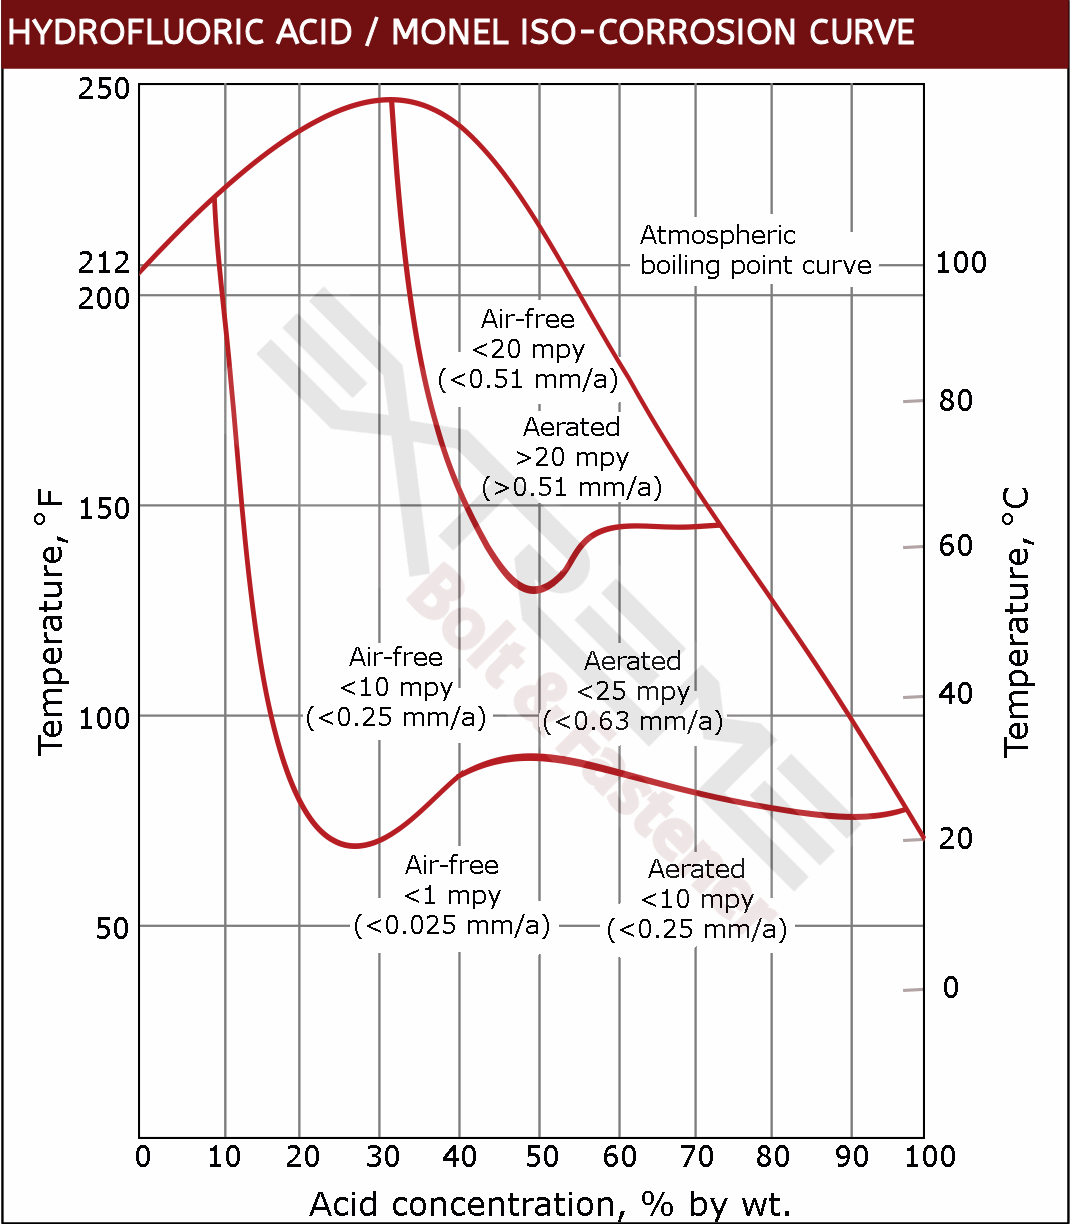 Monel 400 HF IsoCorrosion Curve